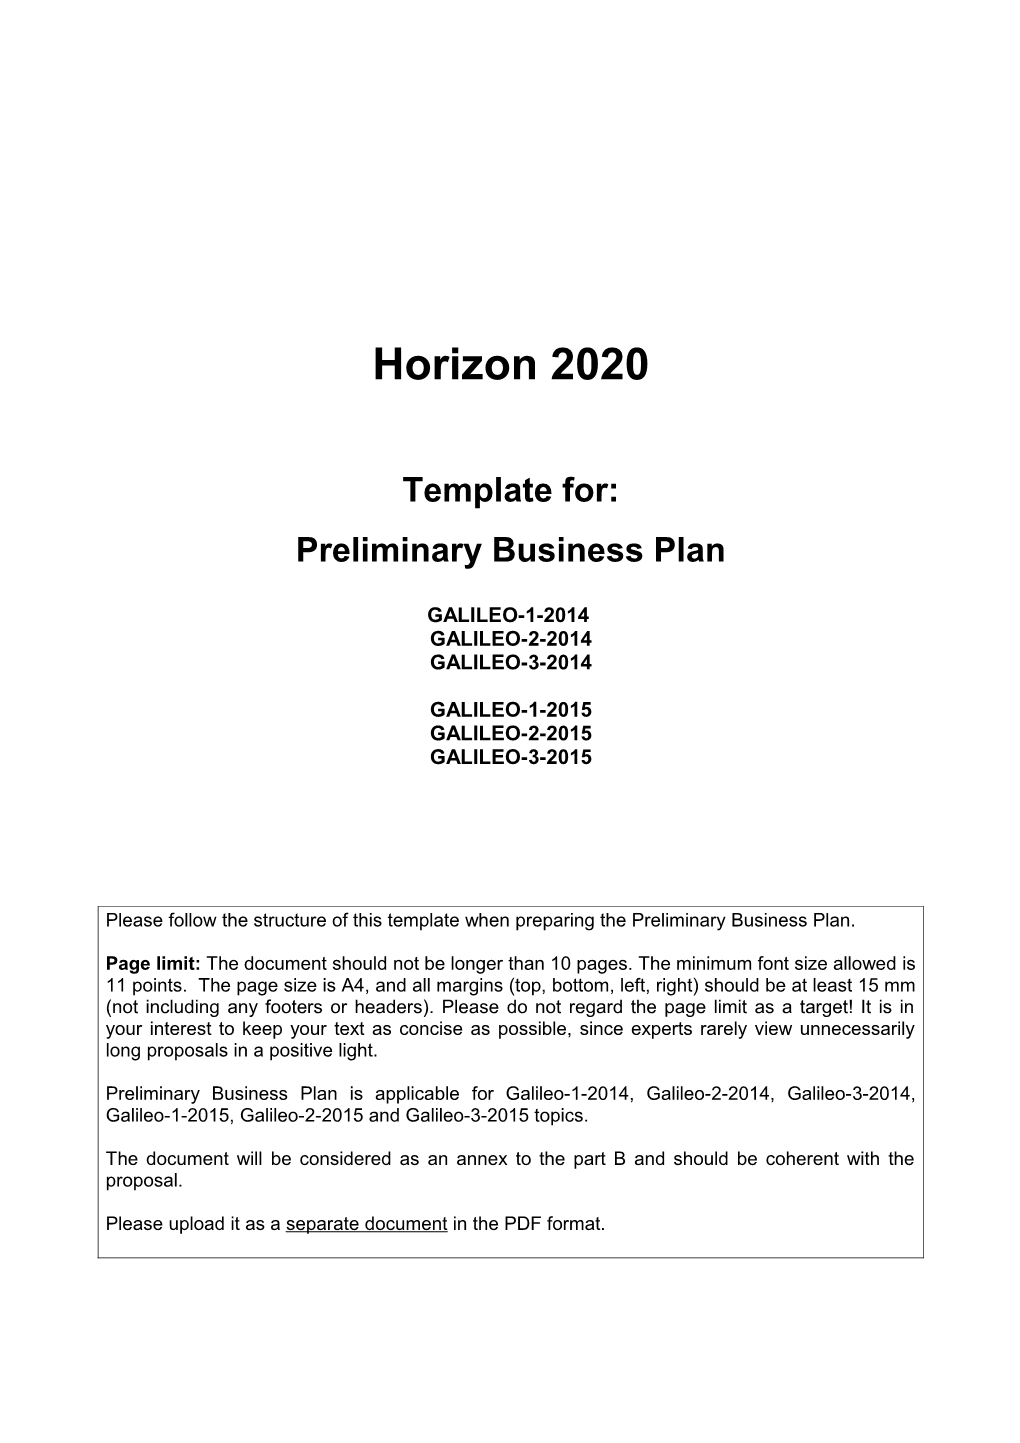 Preliminary Business Plan